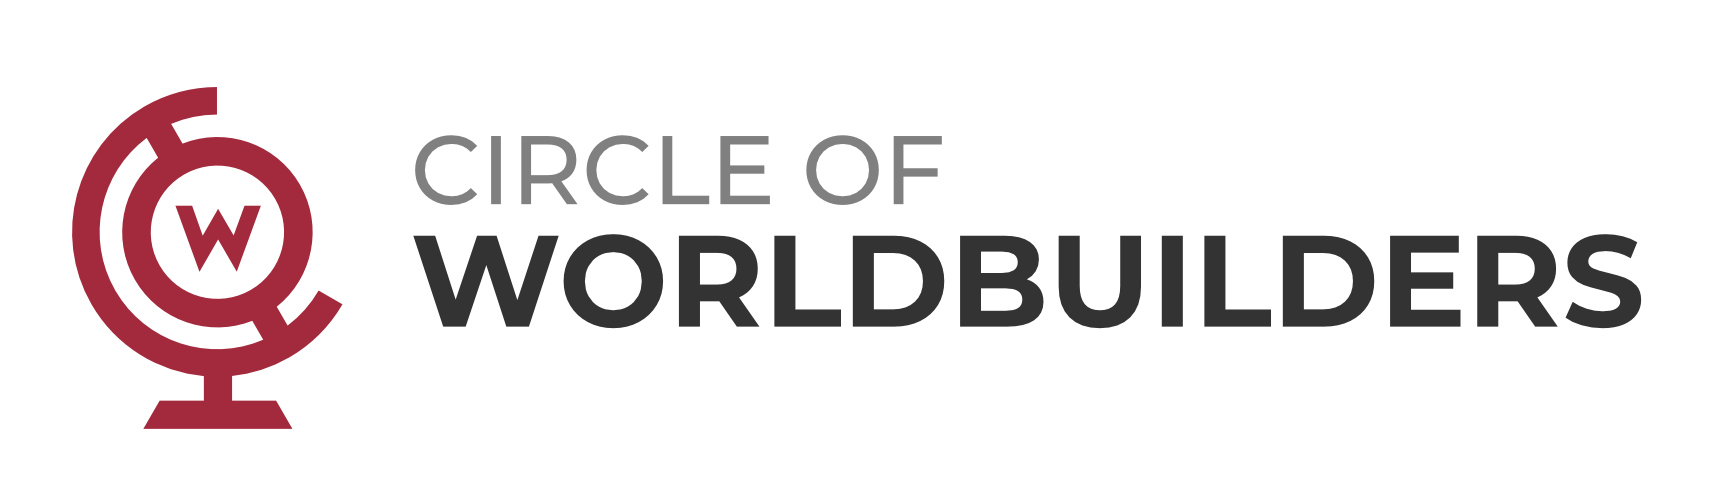 Circle of Worldbuilders